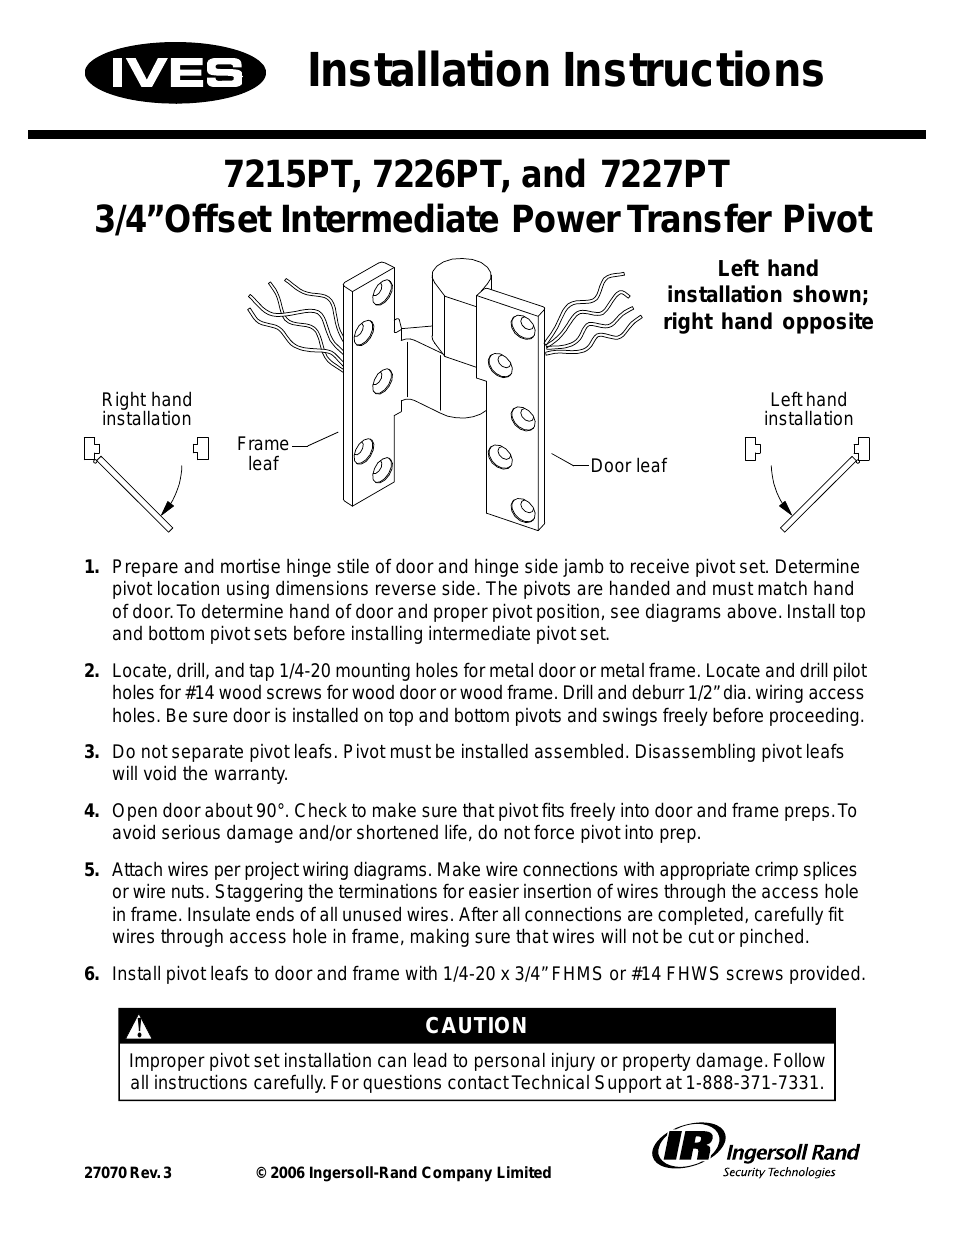 Offset Intermediate Power Transfer Pivot 7226PT